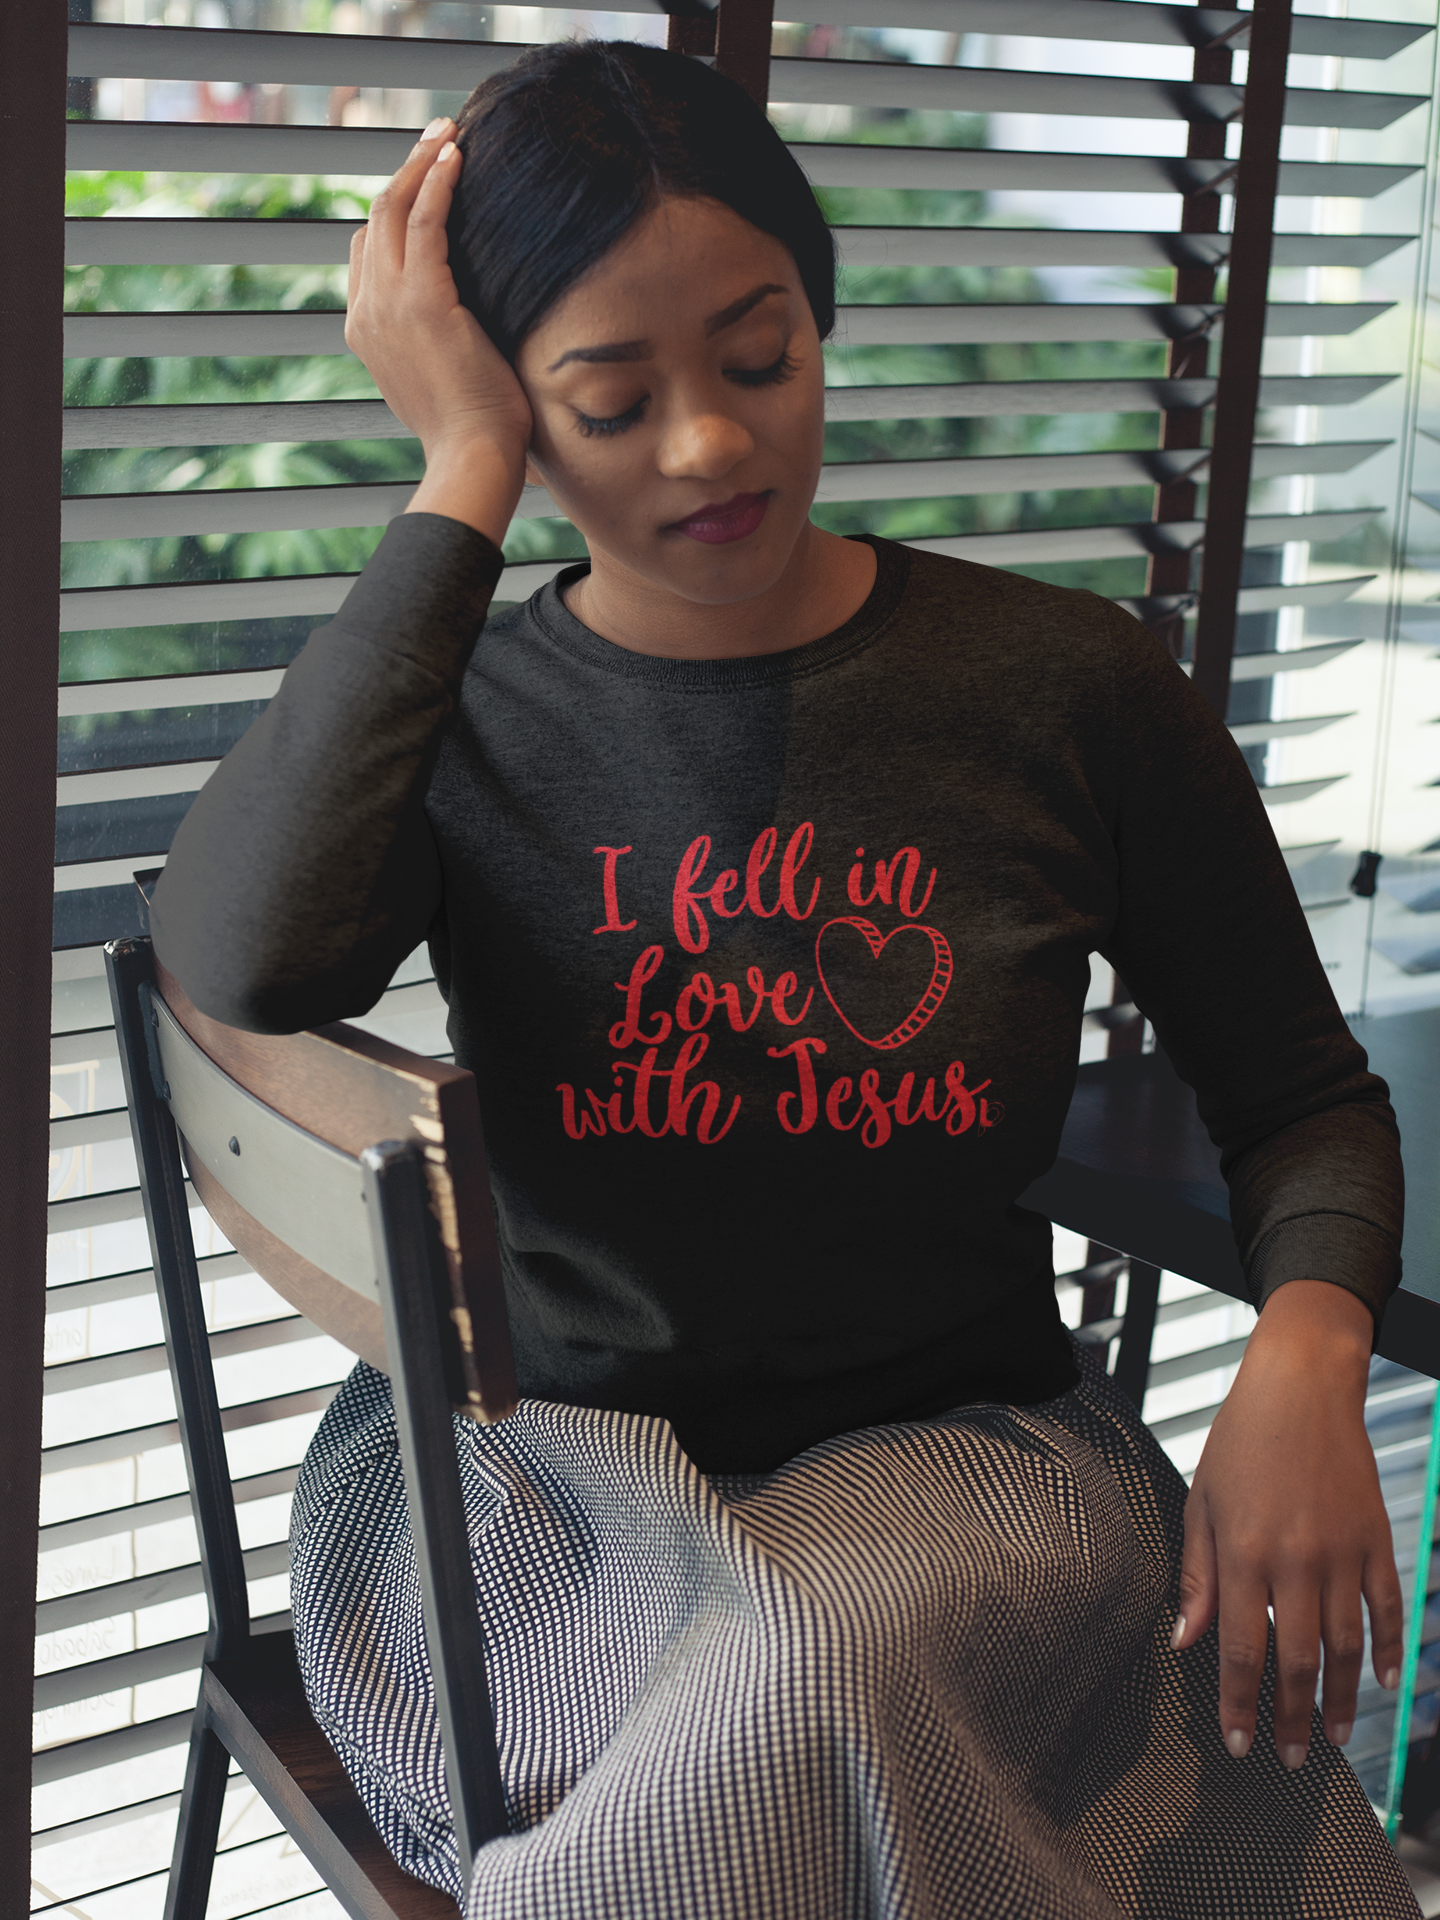 Fell In Love With Jesus Sweatshirt (Custom)